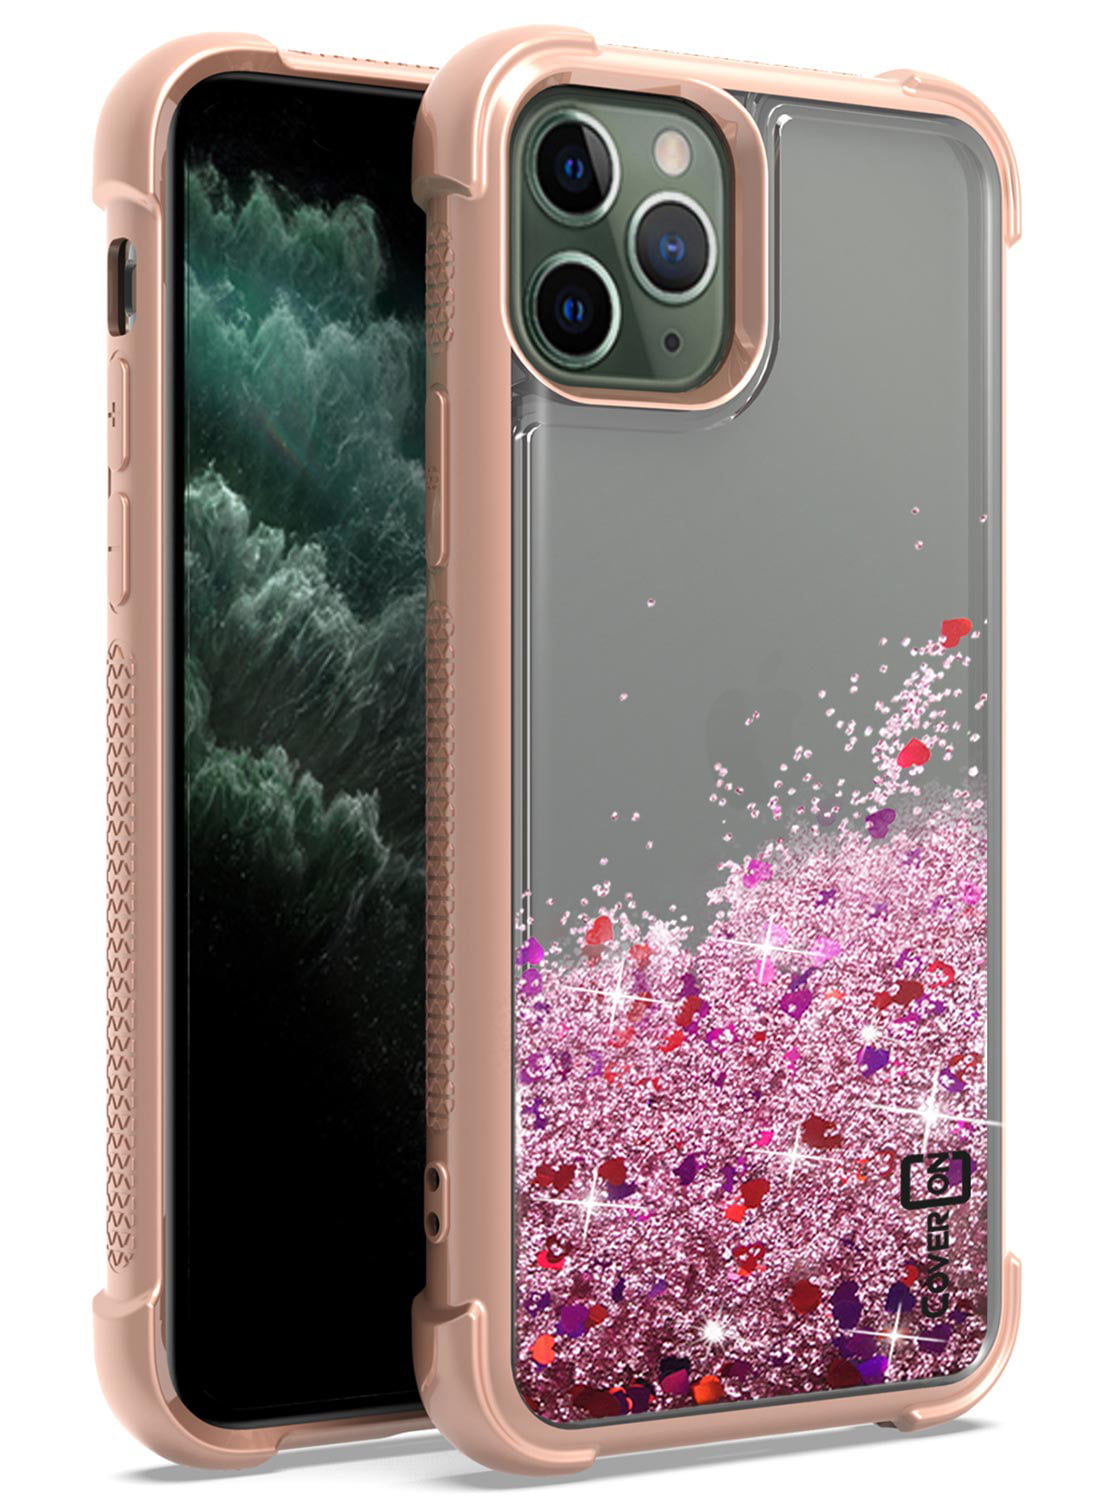 CoverON Apple iPhone 11 Pro Max Case Liquid Glitter Bling Clear TPU ...